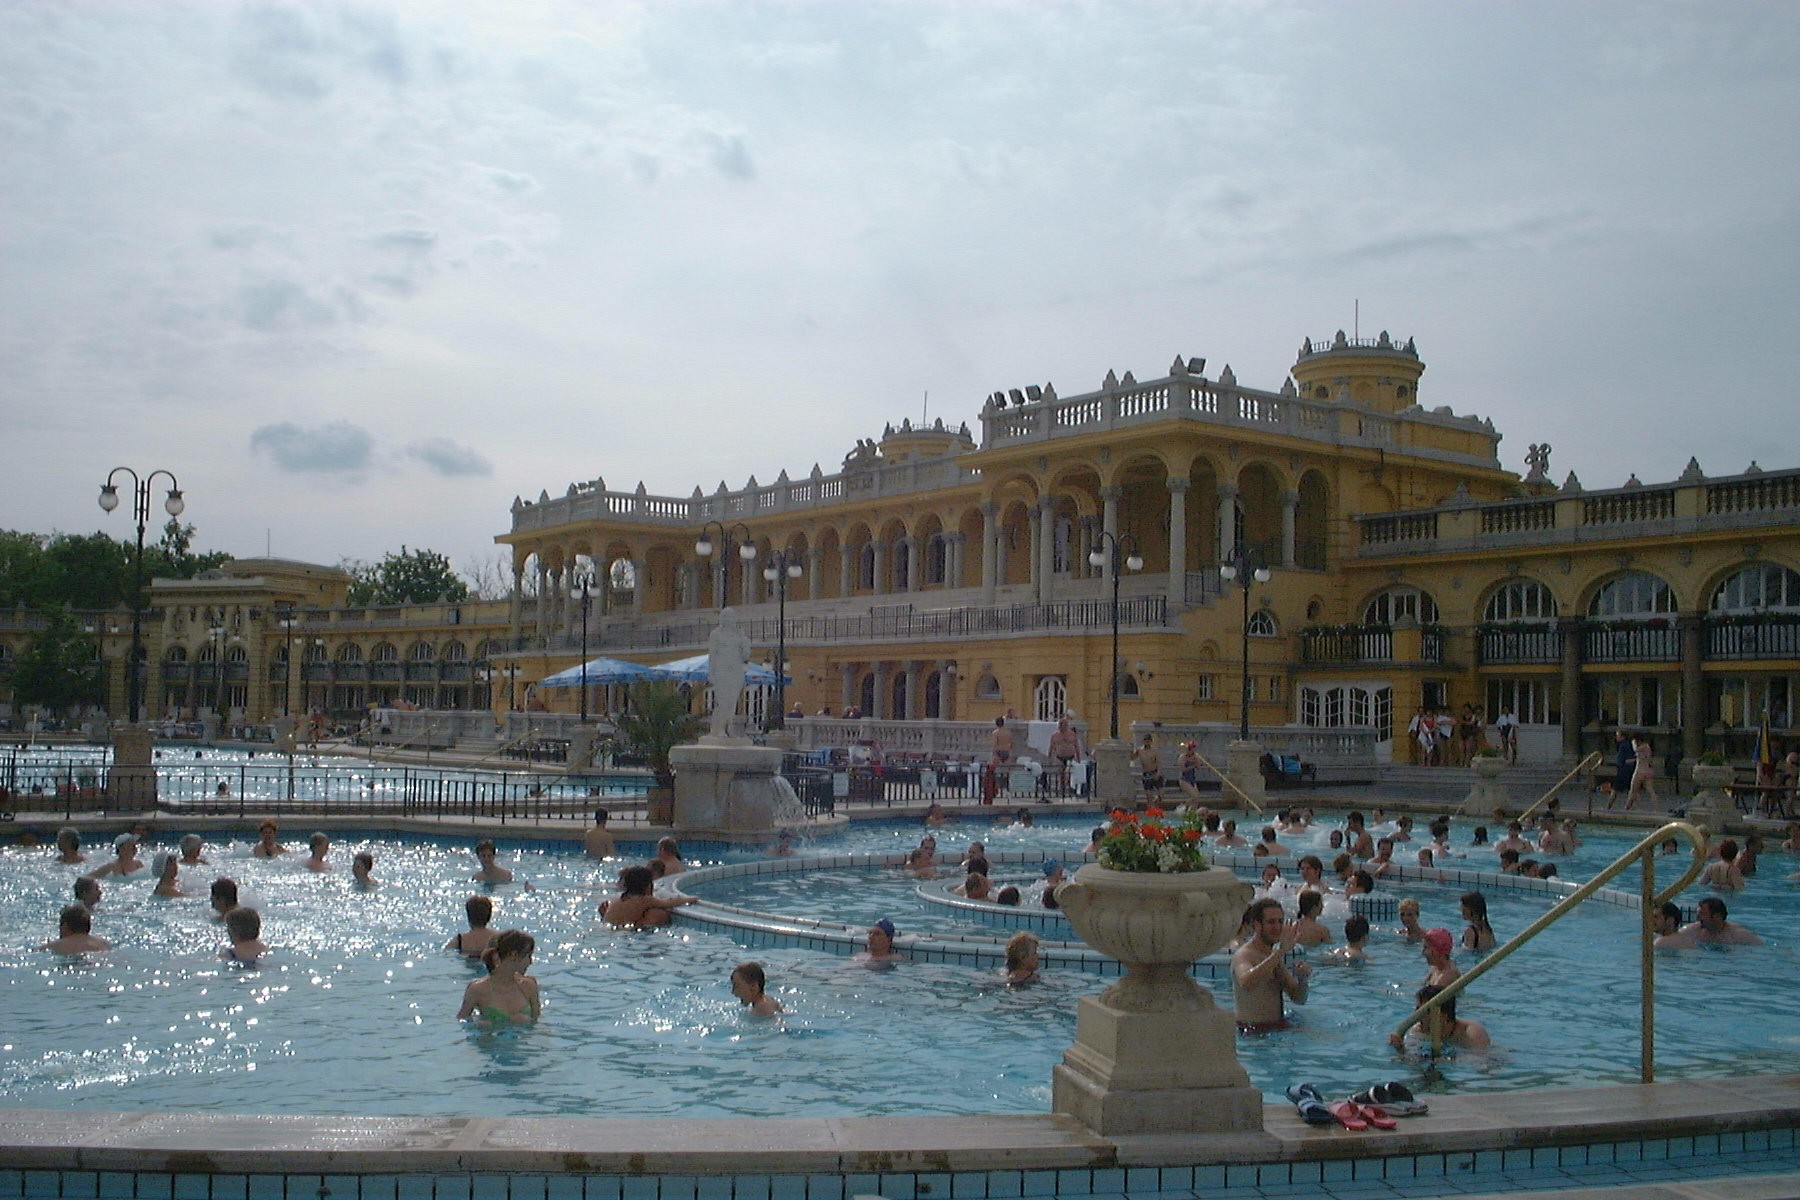 Széchenyi Thermal Bath, Budapest: All year